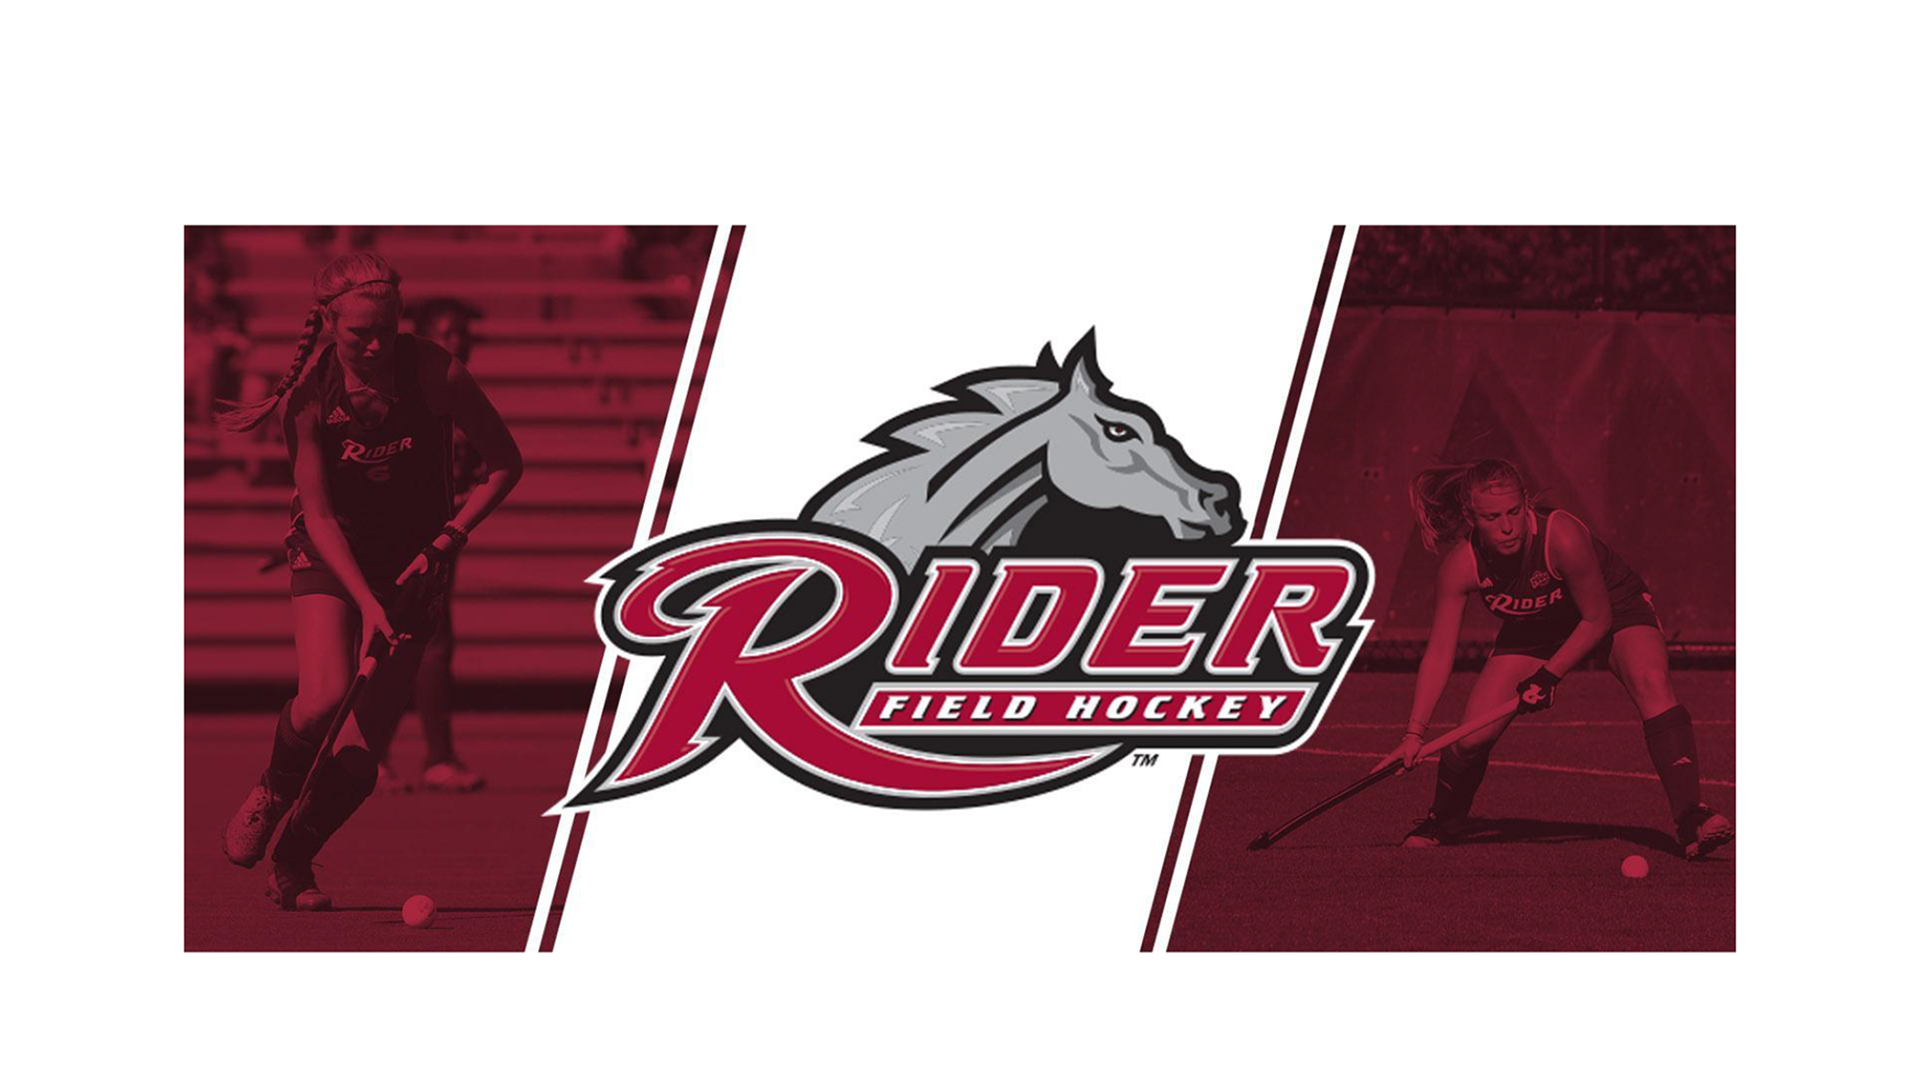 Rider field hockey graphic